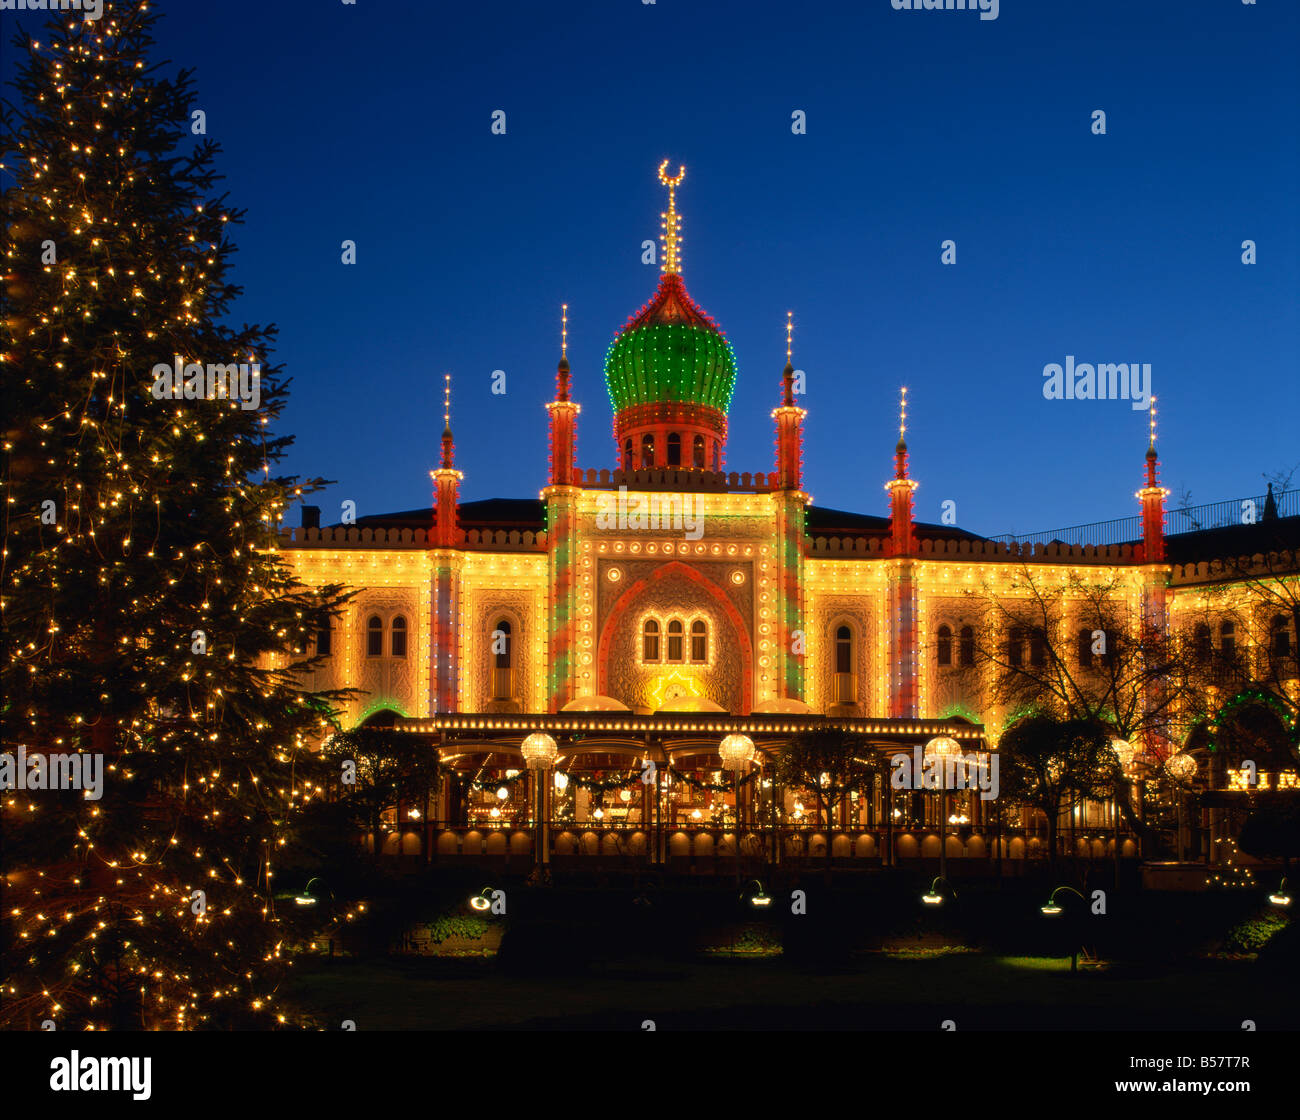 Illuminated Christmas tree and the Pavilion at dusk Tivoli Gardens Copenhagen Denmark Scandinavia Europe Stock Photo